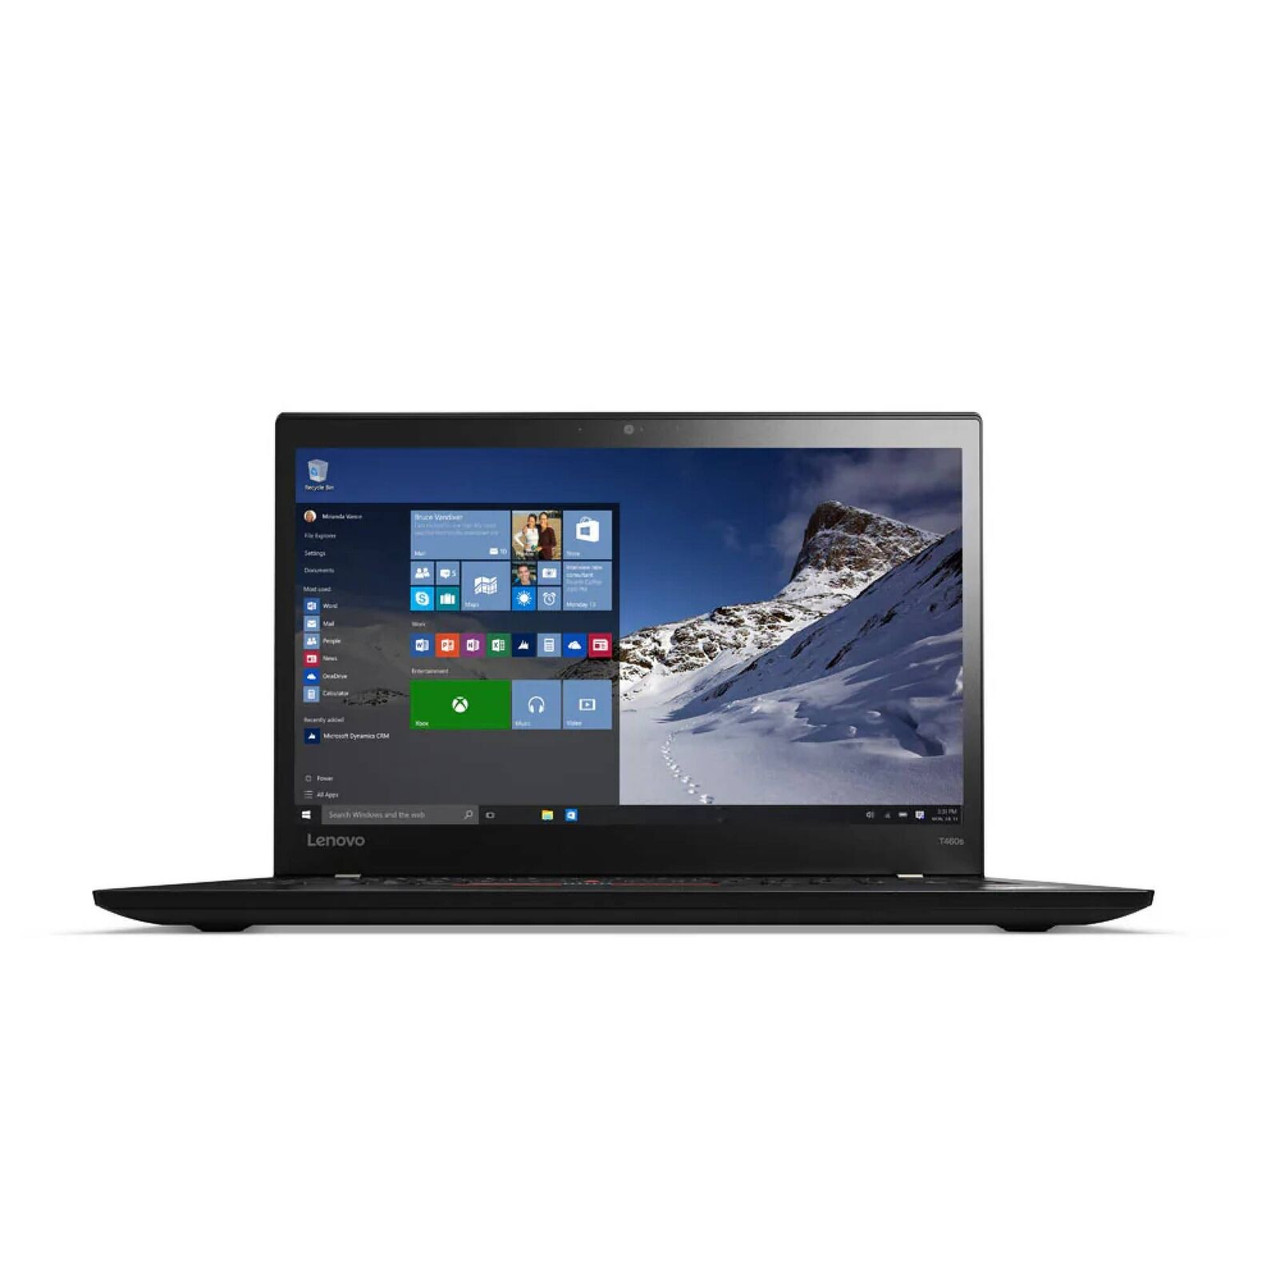 Lenovo Thinkpad T460S 14" Laptop Intel Core i5 2.40 GHz 8 GB 256 GB SSD W10P | Refurbished